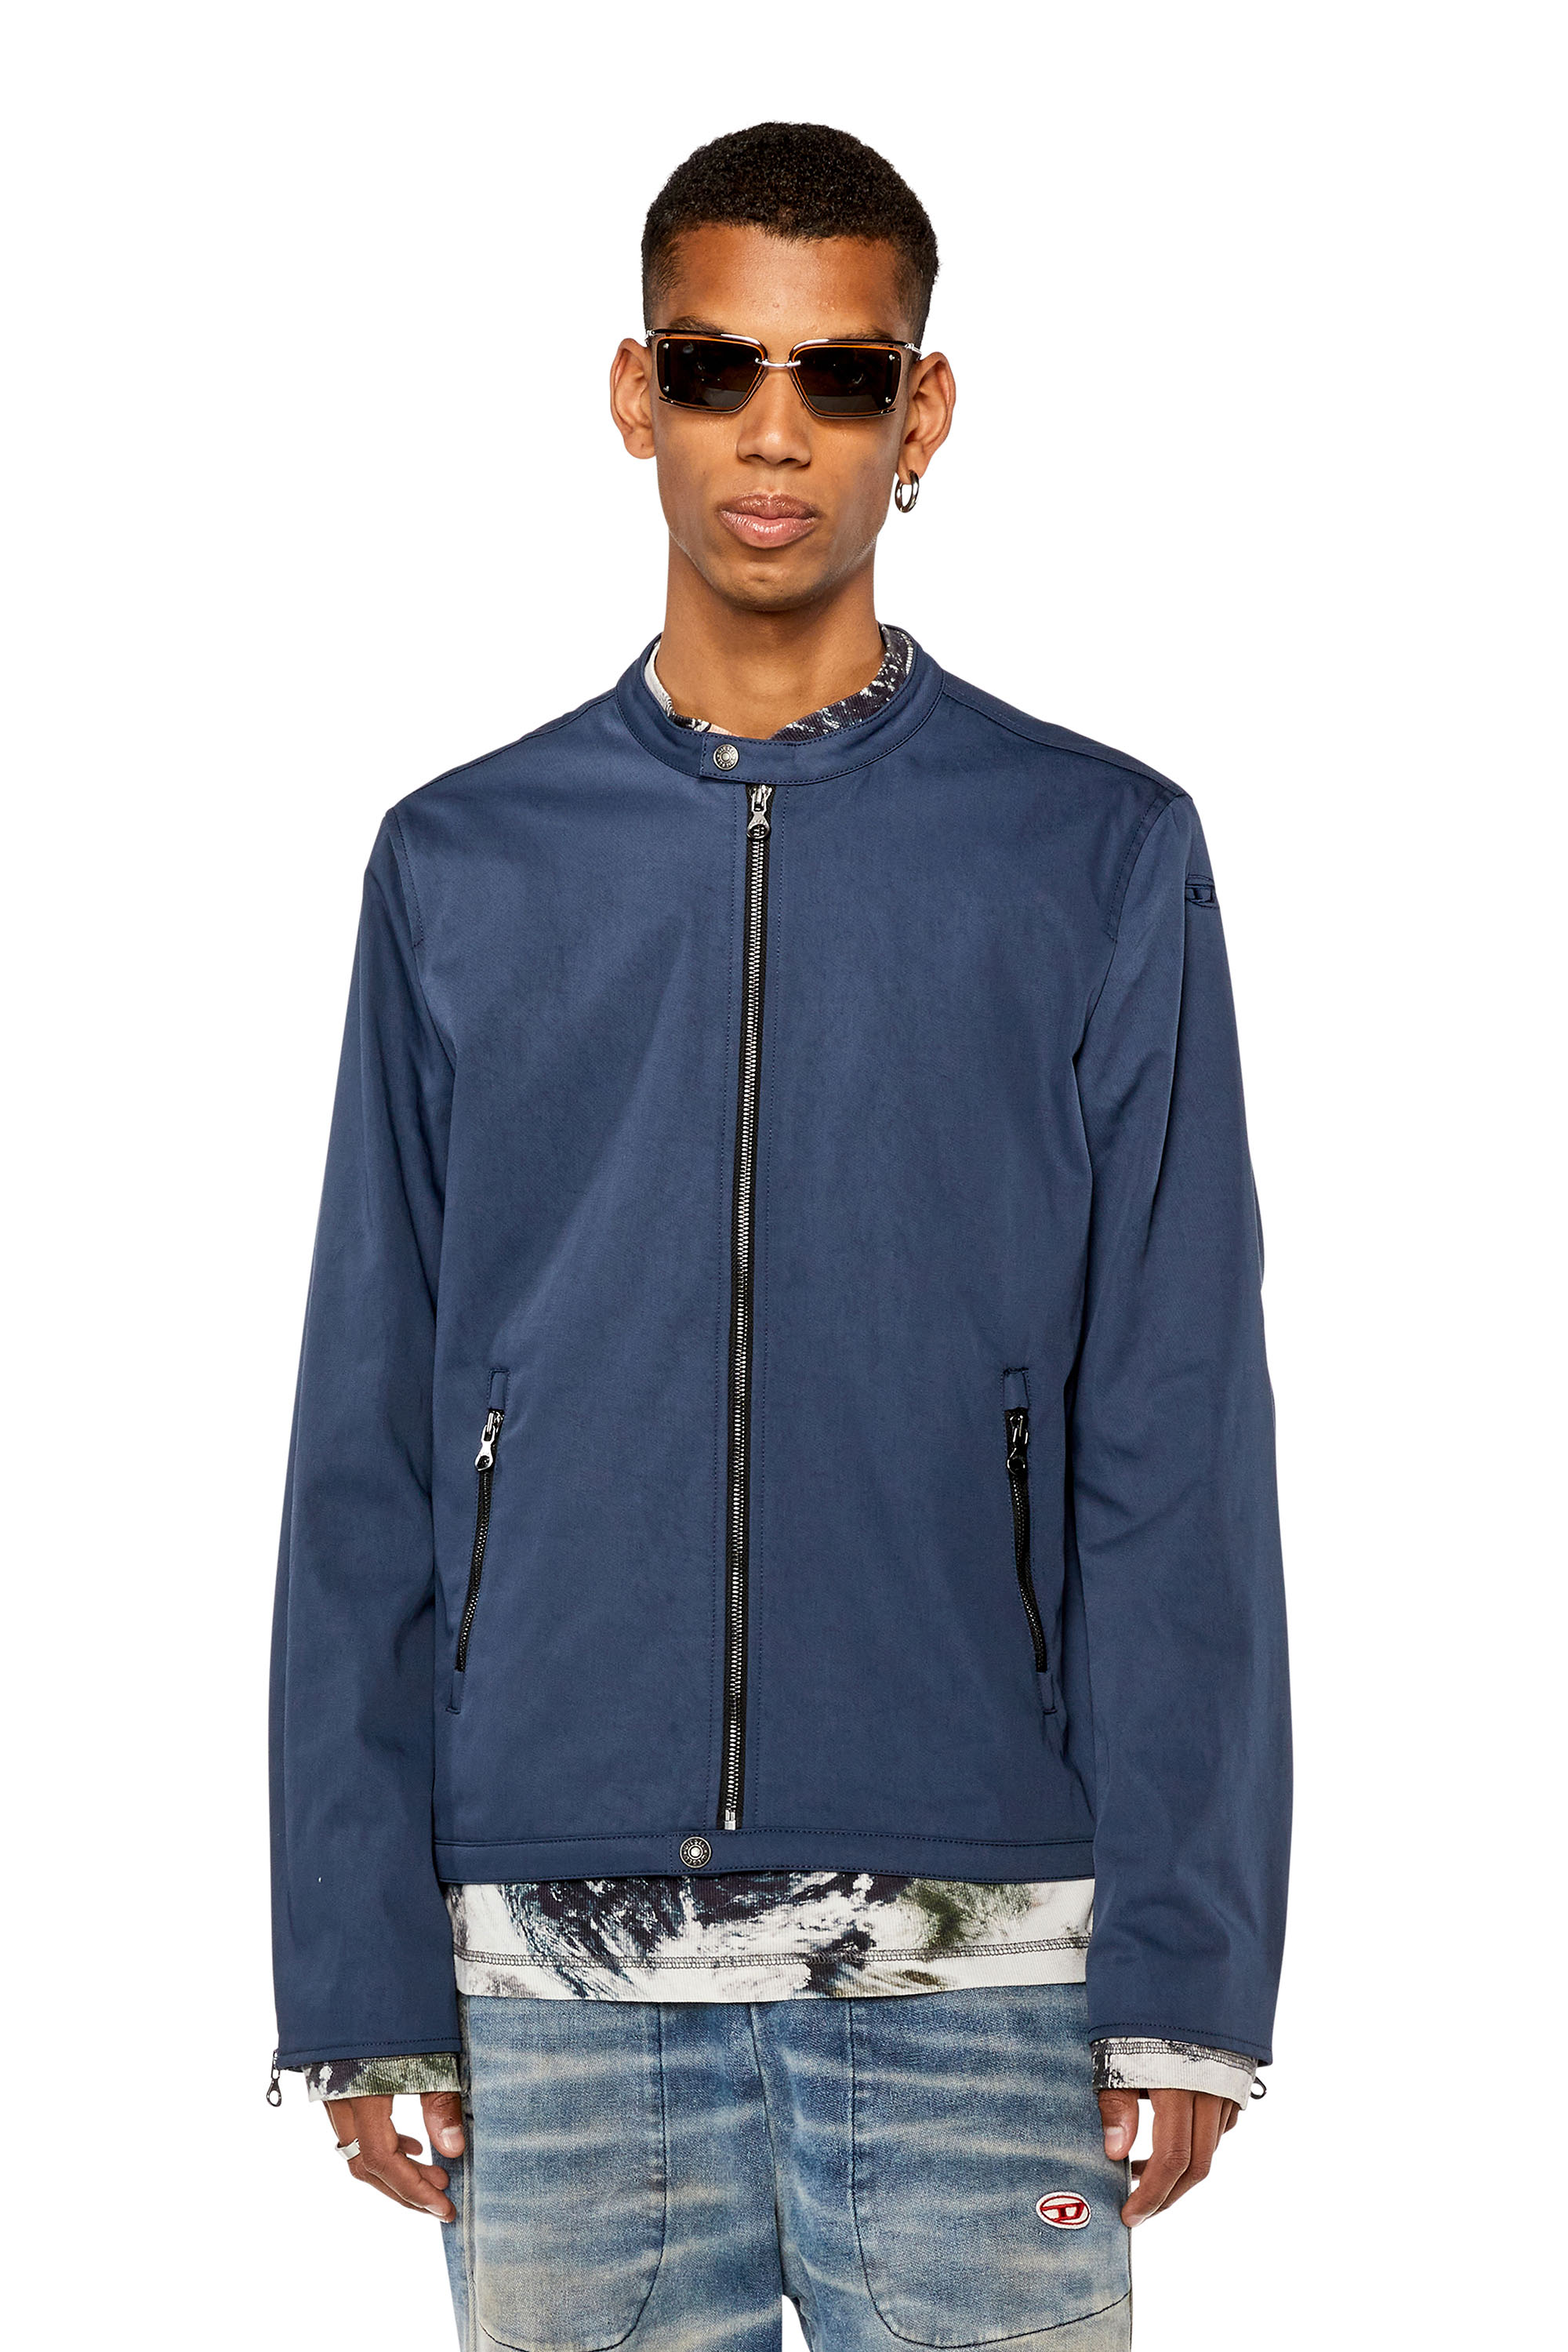 Diesel - J-GLORY-NW, Man Biker jacket in cotton-touch nylon in Blue - Image 1